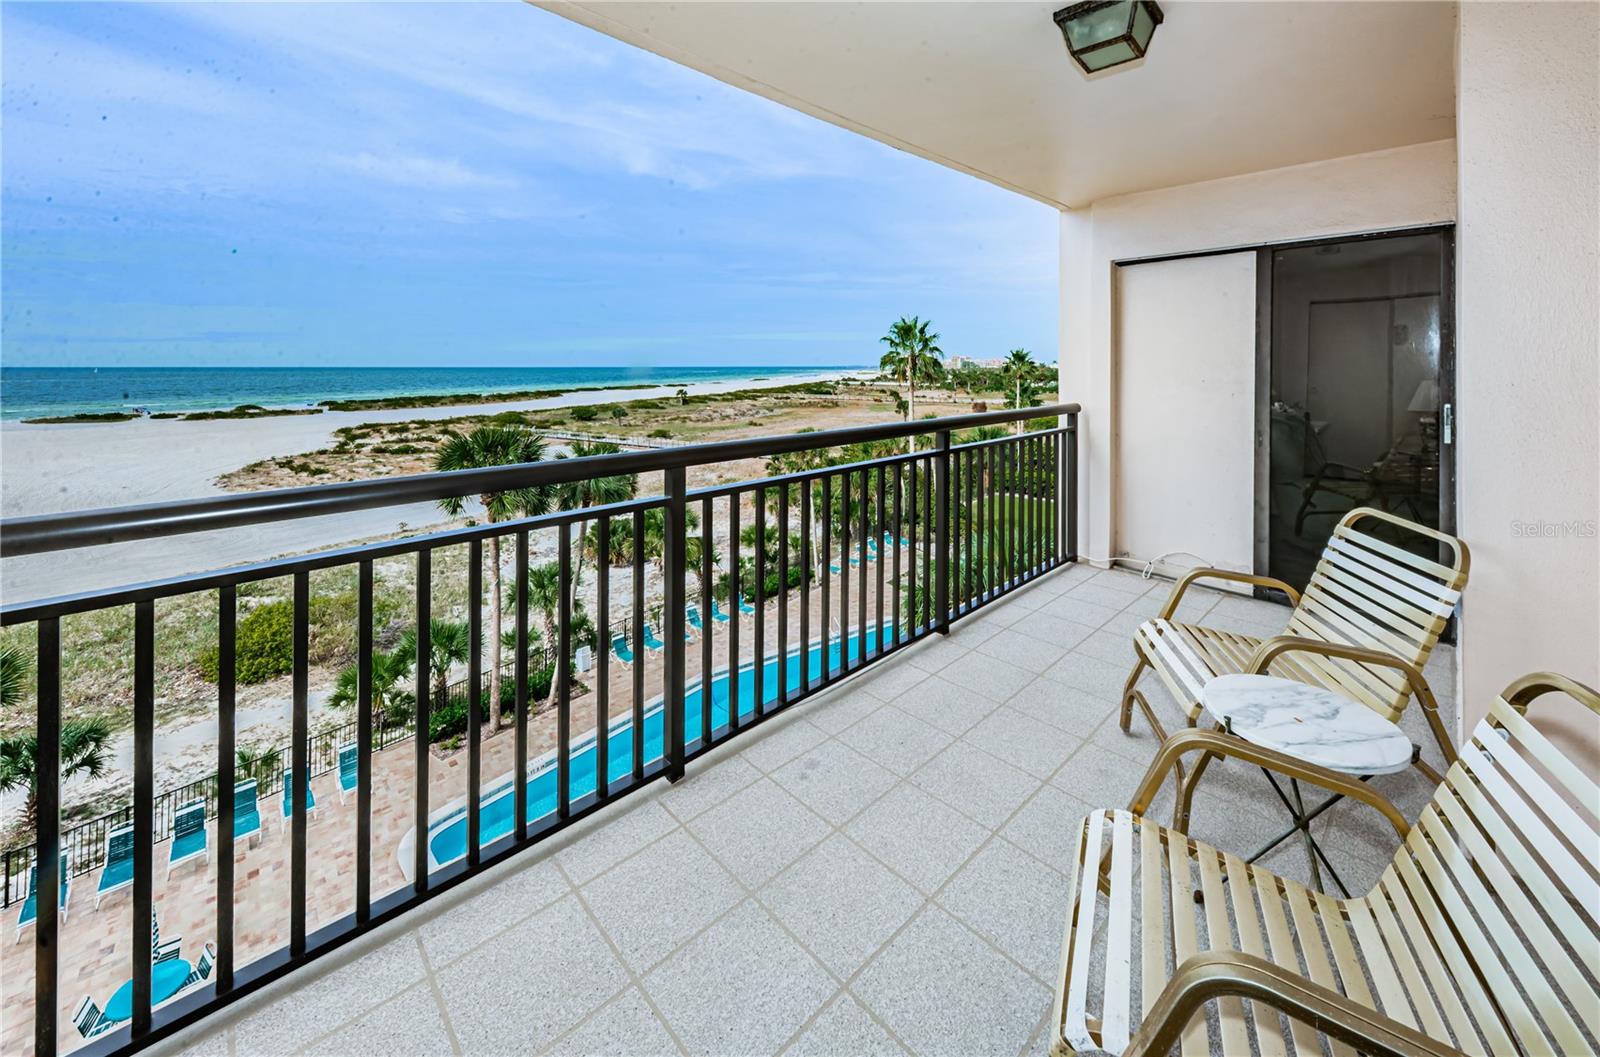 Balcony overlooking the pool, beach and Gulf.